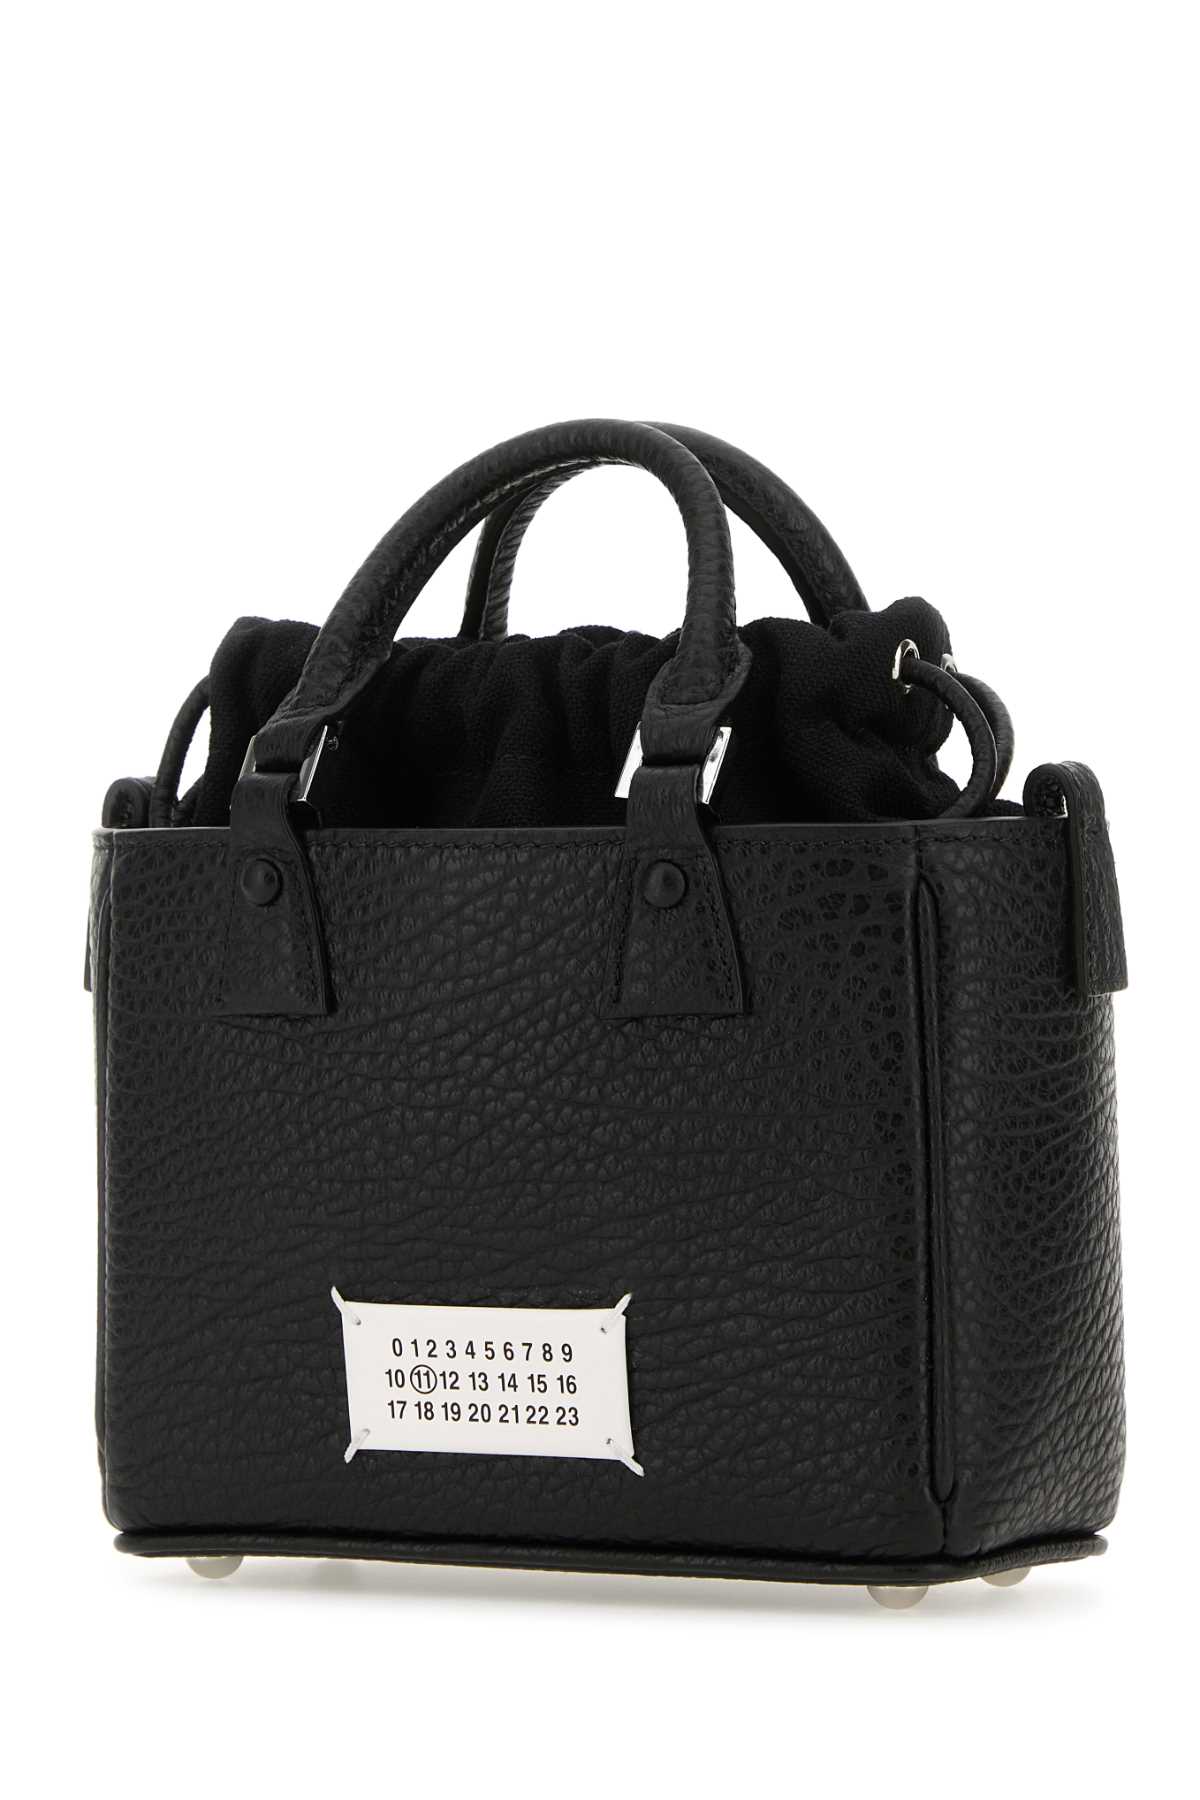 Maison Margiela Woman Black Leather 5ac Tote Horizontal Handbag